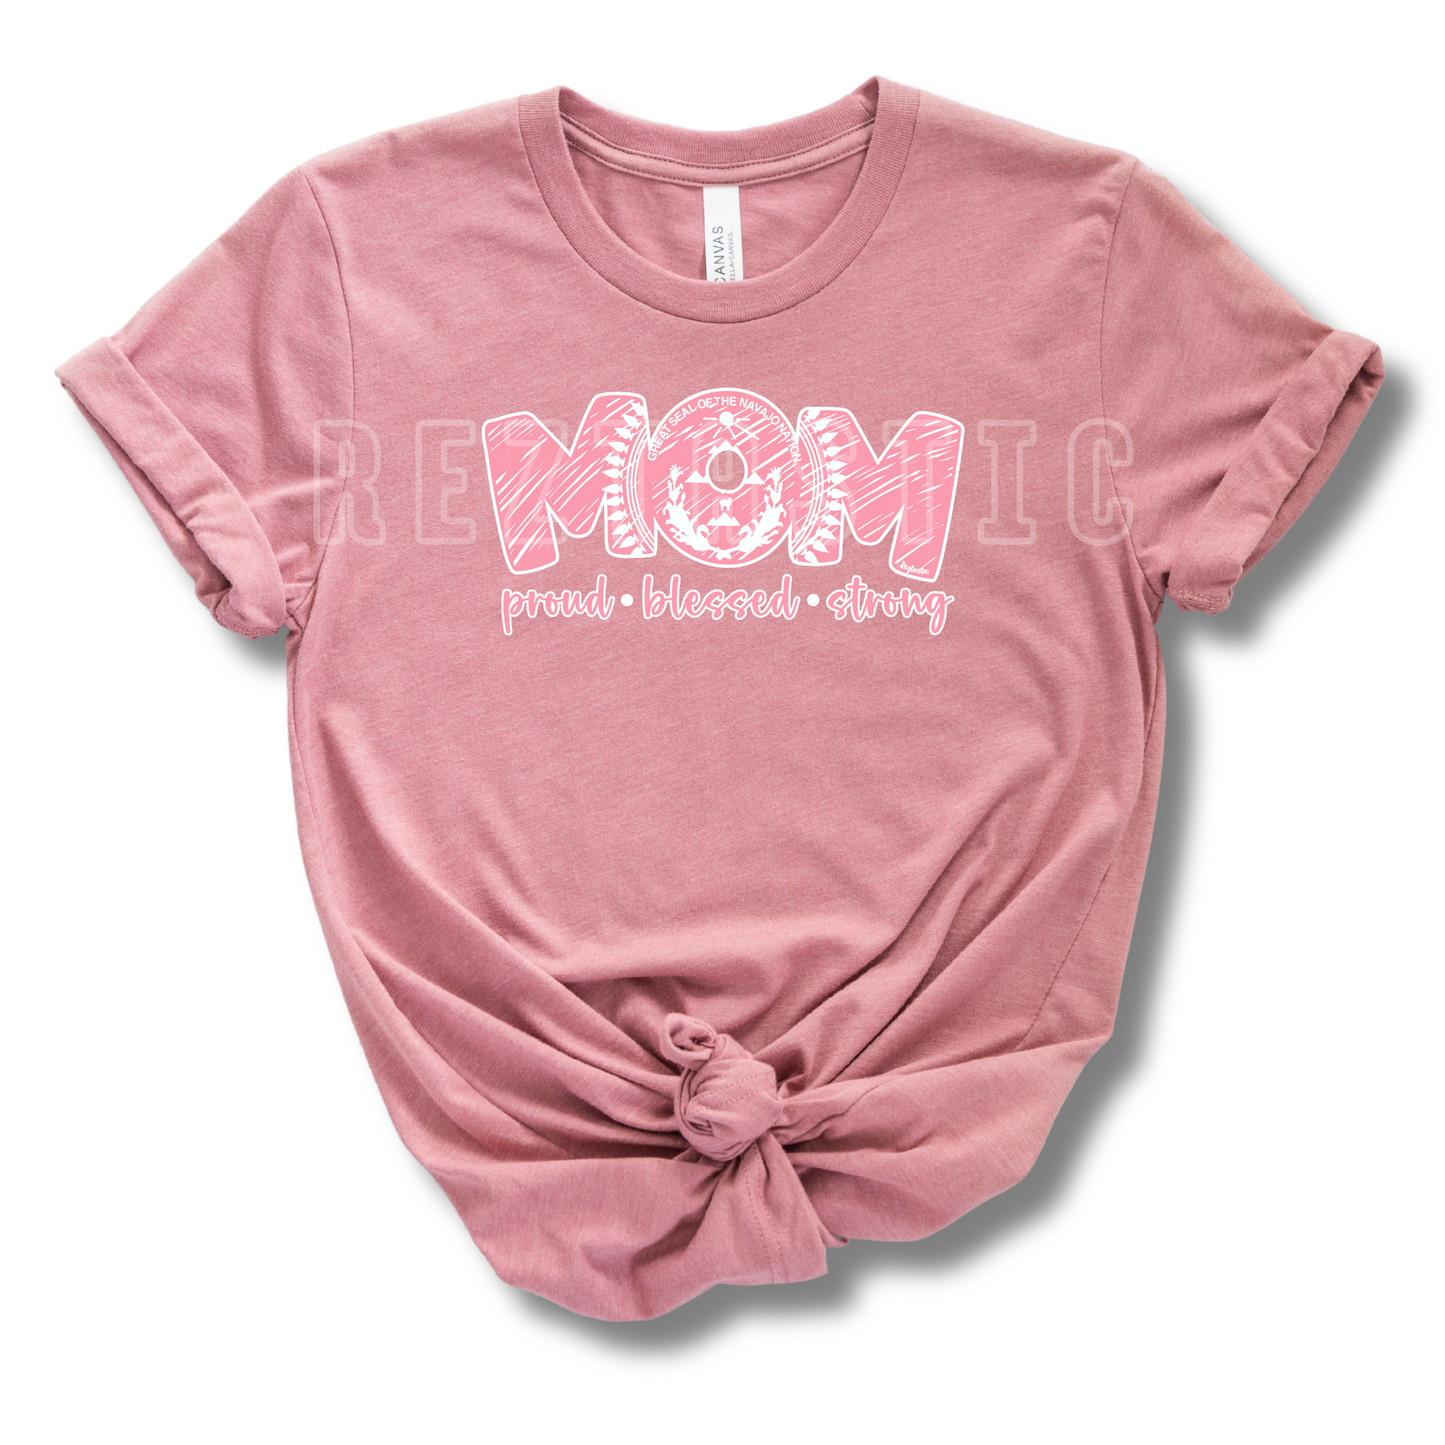 Diné Mom- T-Shirt - Adult